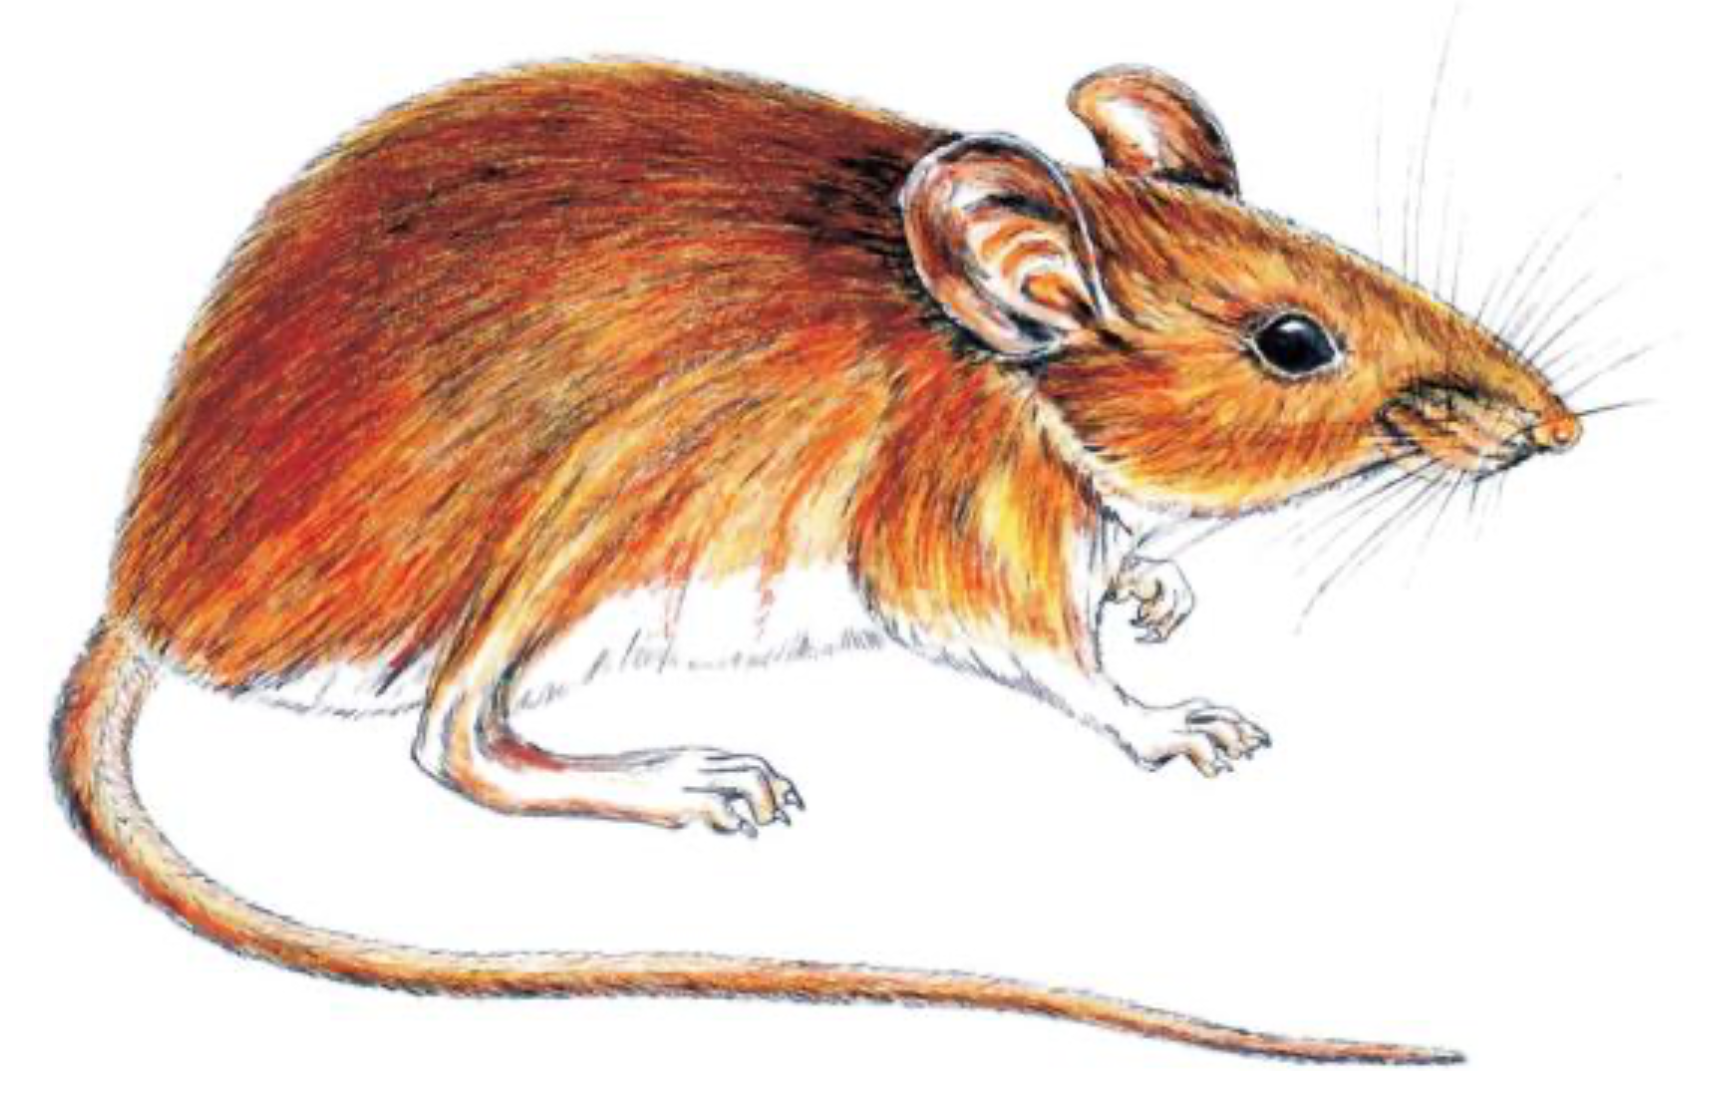 An image of Professor John Winkelmann's mouse